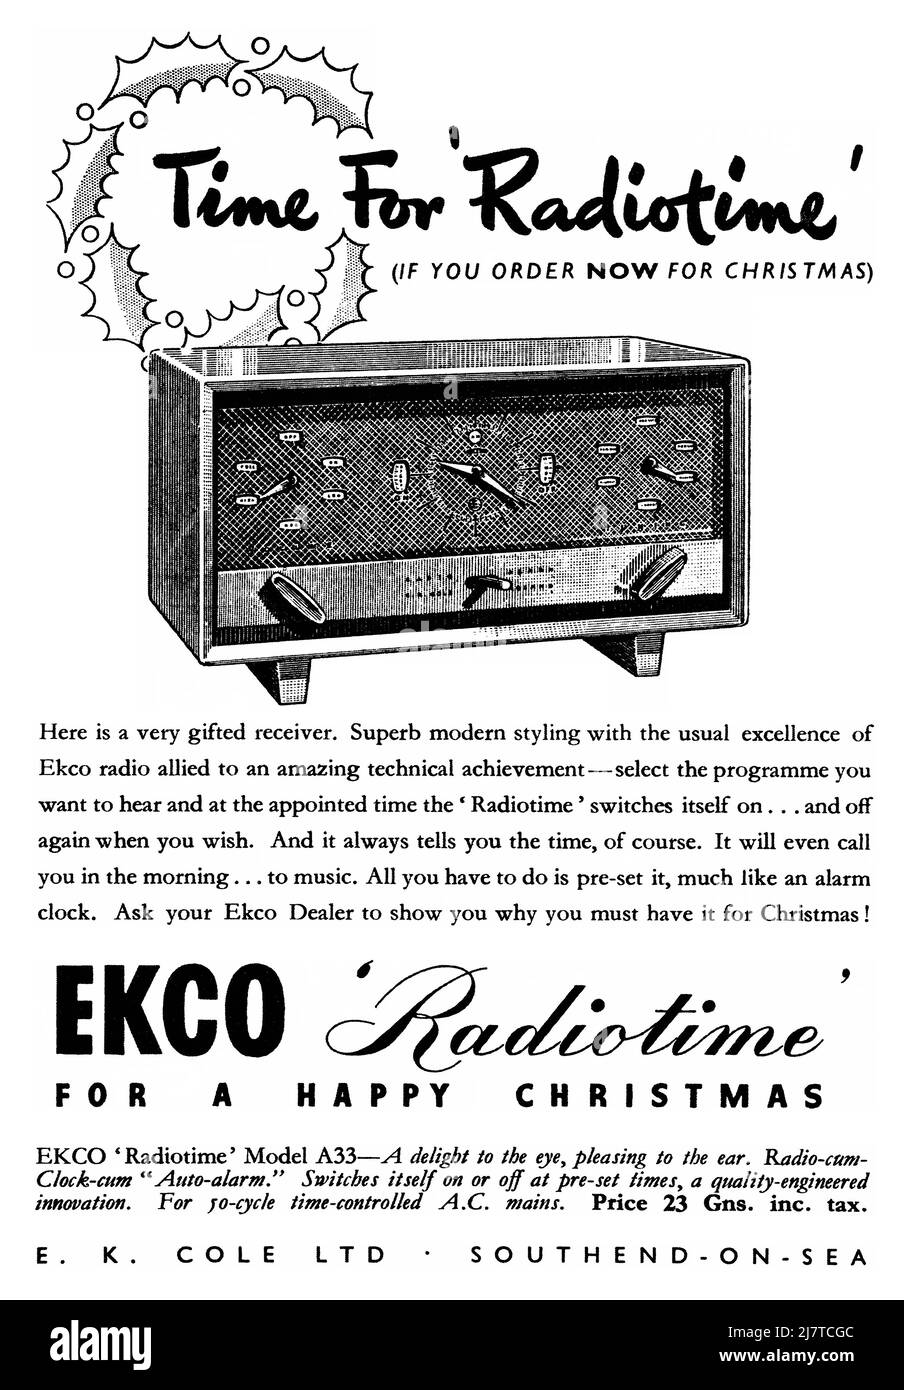 1948 British Christmas advertisement for the EKCO Radiotime Model A33 radio receiver. Stock Photo